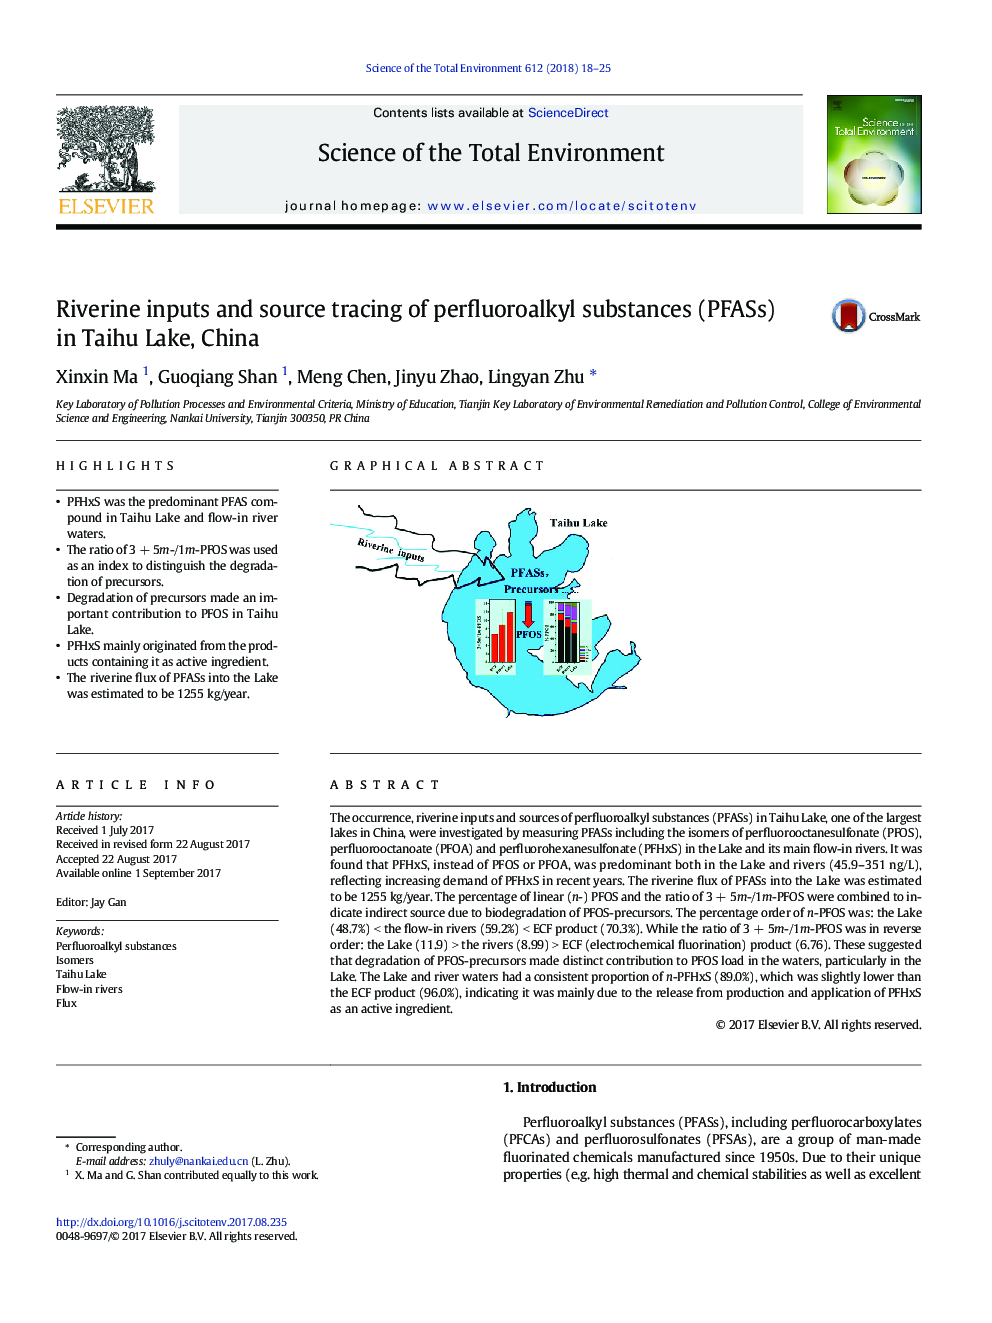 Riverine inputs and source tracing of perfluoroalkyl substances (PFASs) in Taihu Lake, China